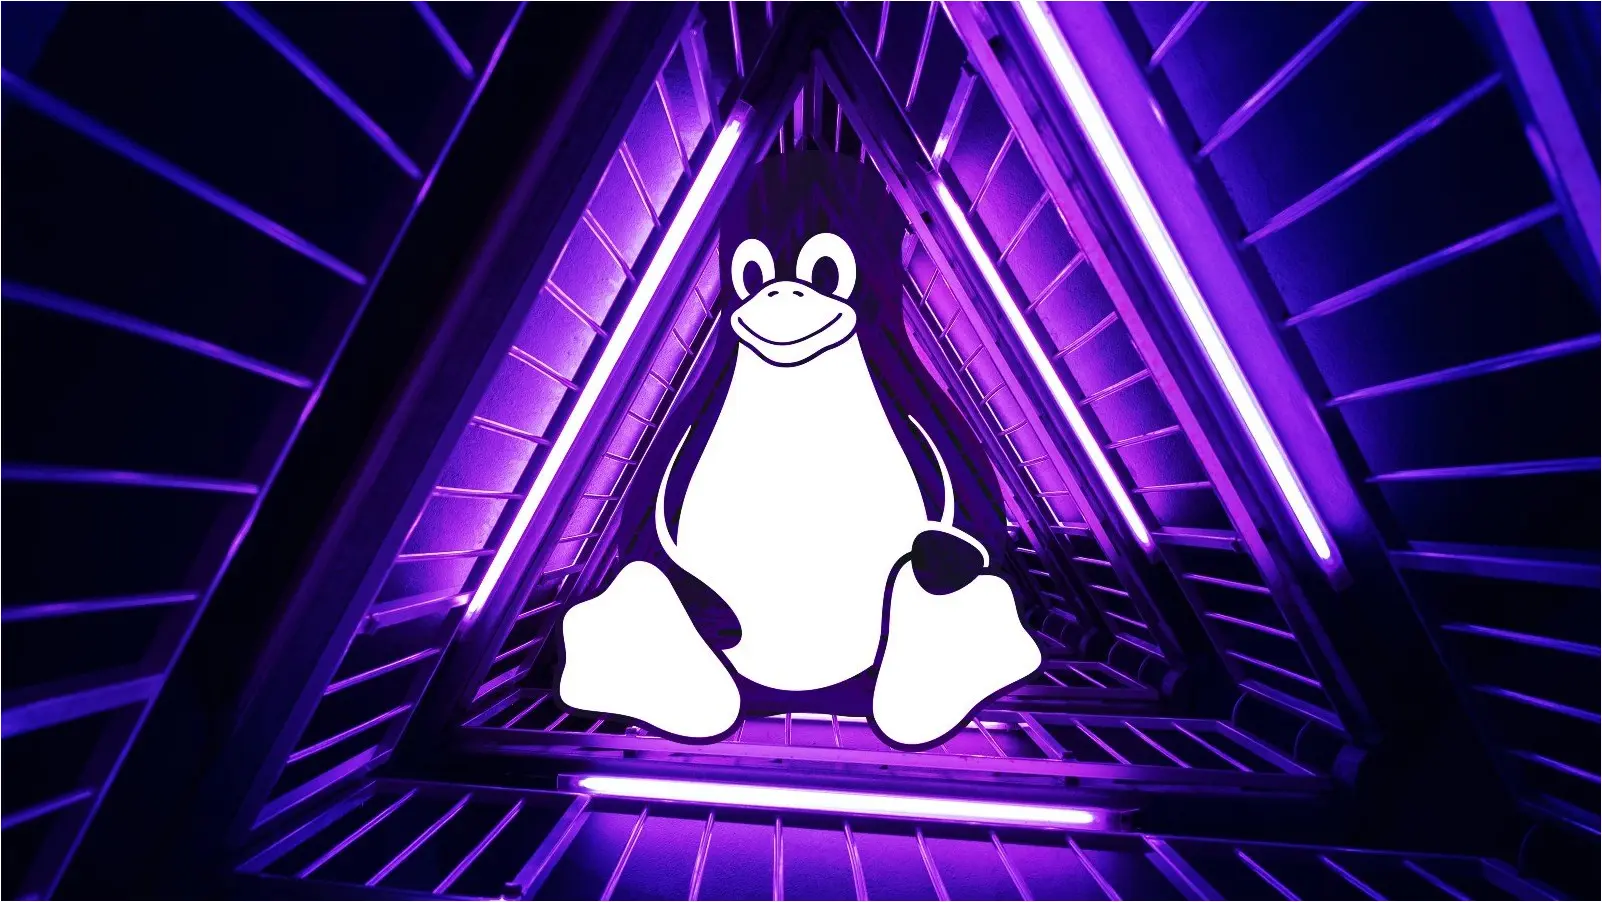 Linux Tux in a purple tunnel